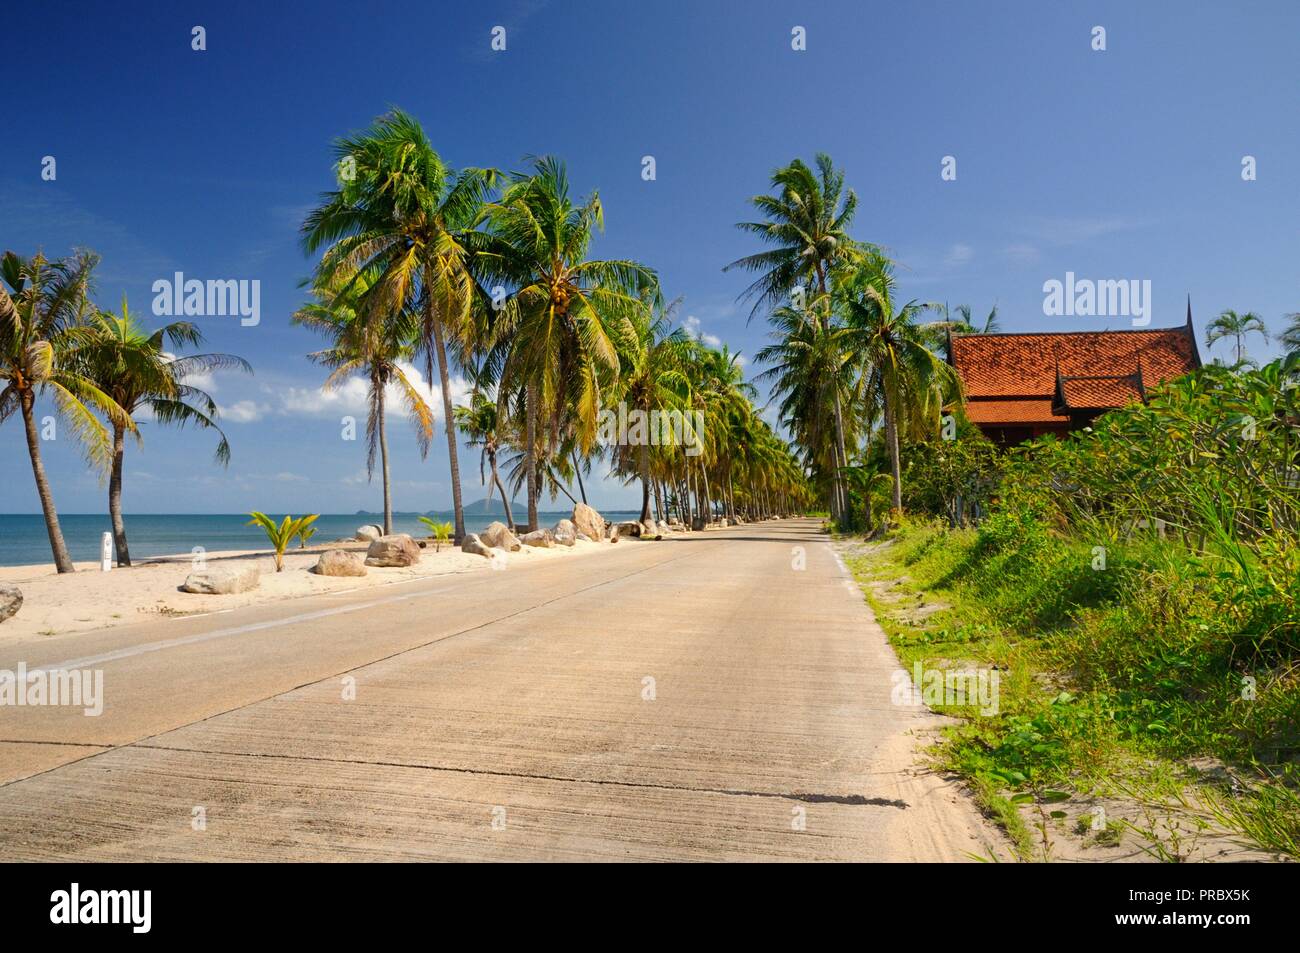 Scenic concrete road along paradise Ban Krut beach at Bang Saphan district of Prachuap Khiri Khan province of Thailand. Stock Photo